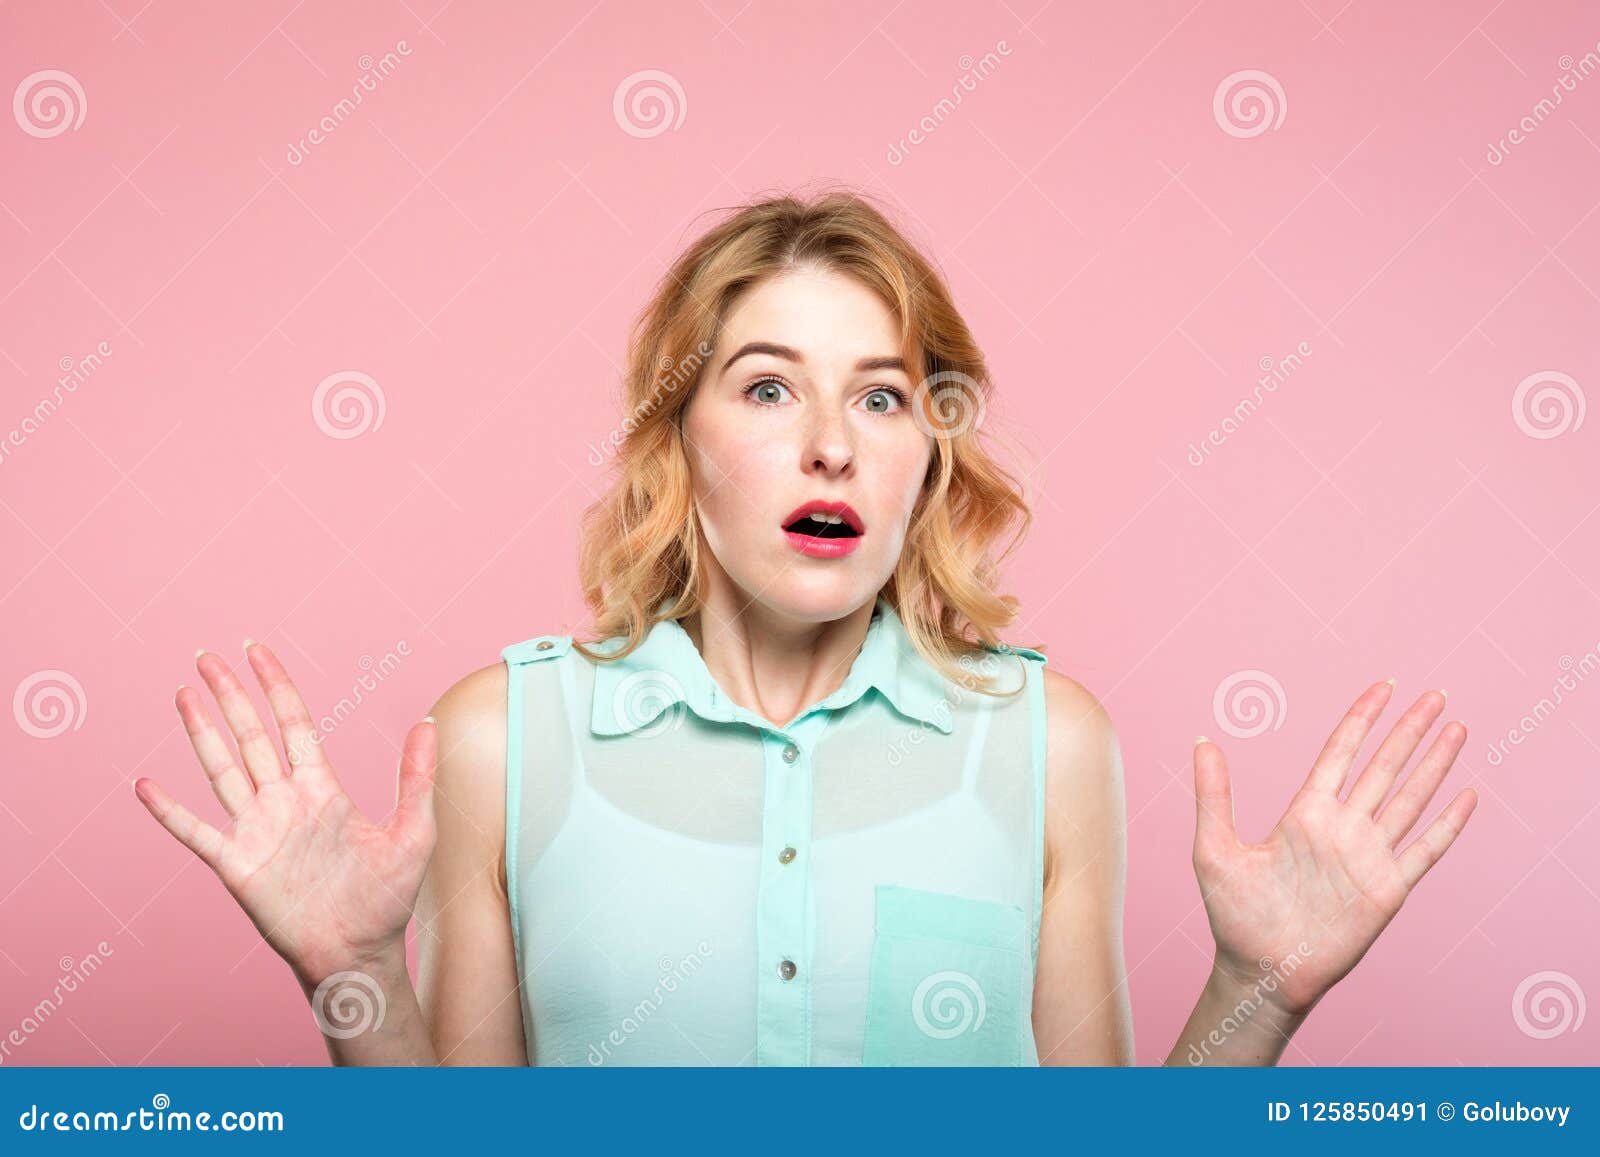 Emotion Expression Overwhelmed Shocked Woman Stock Image Image Of Overwhelmed Portrait 125850491 